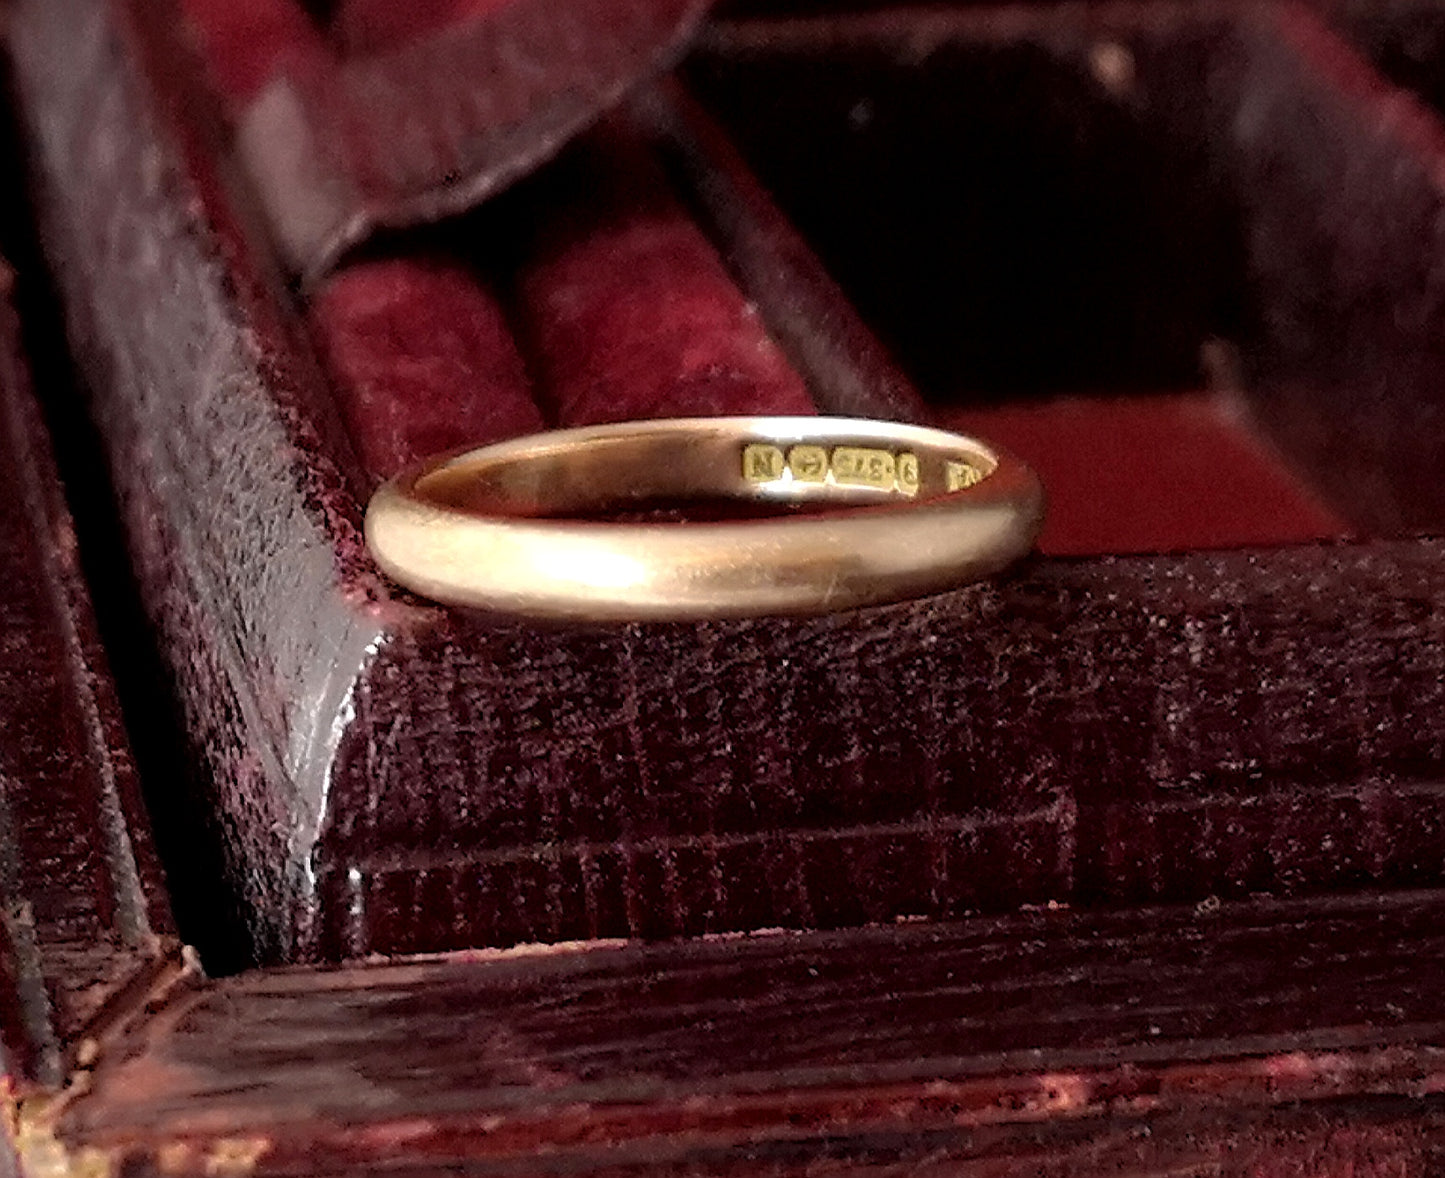 Vintage Art Deco 9ct Rose gold wedding ring, band